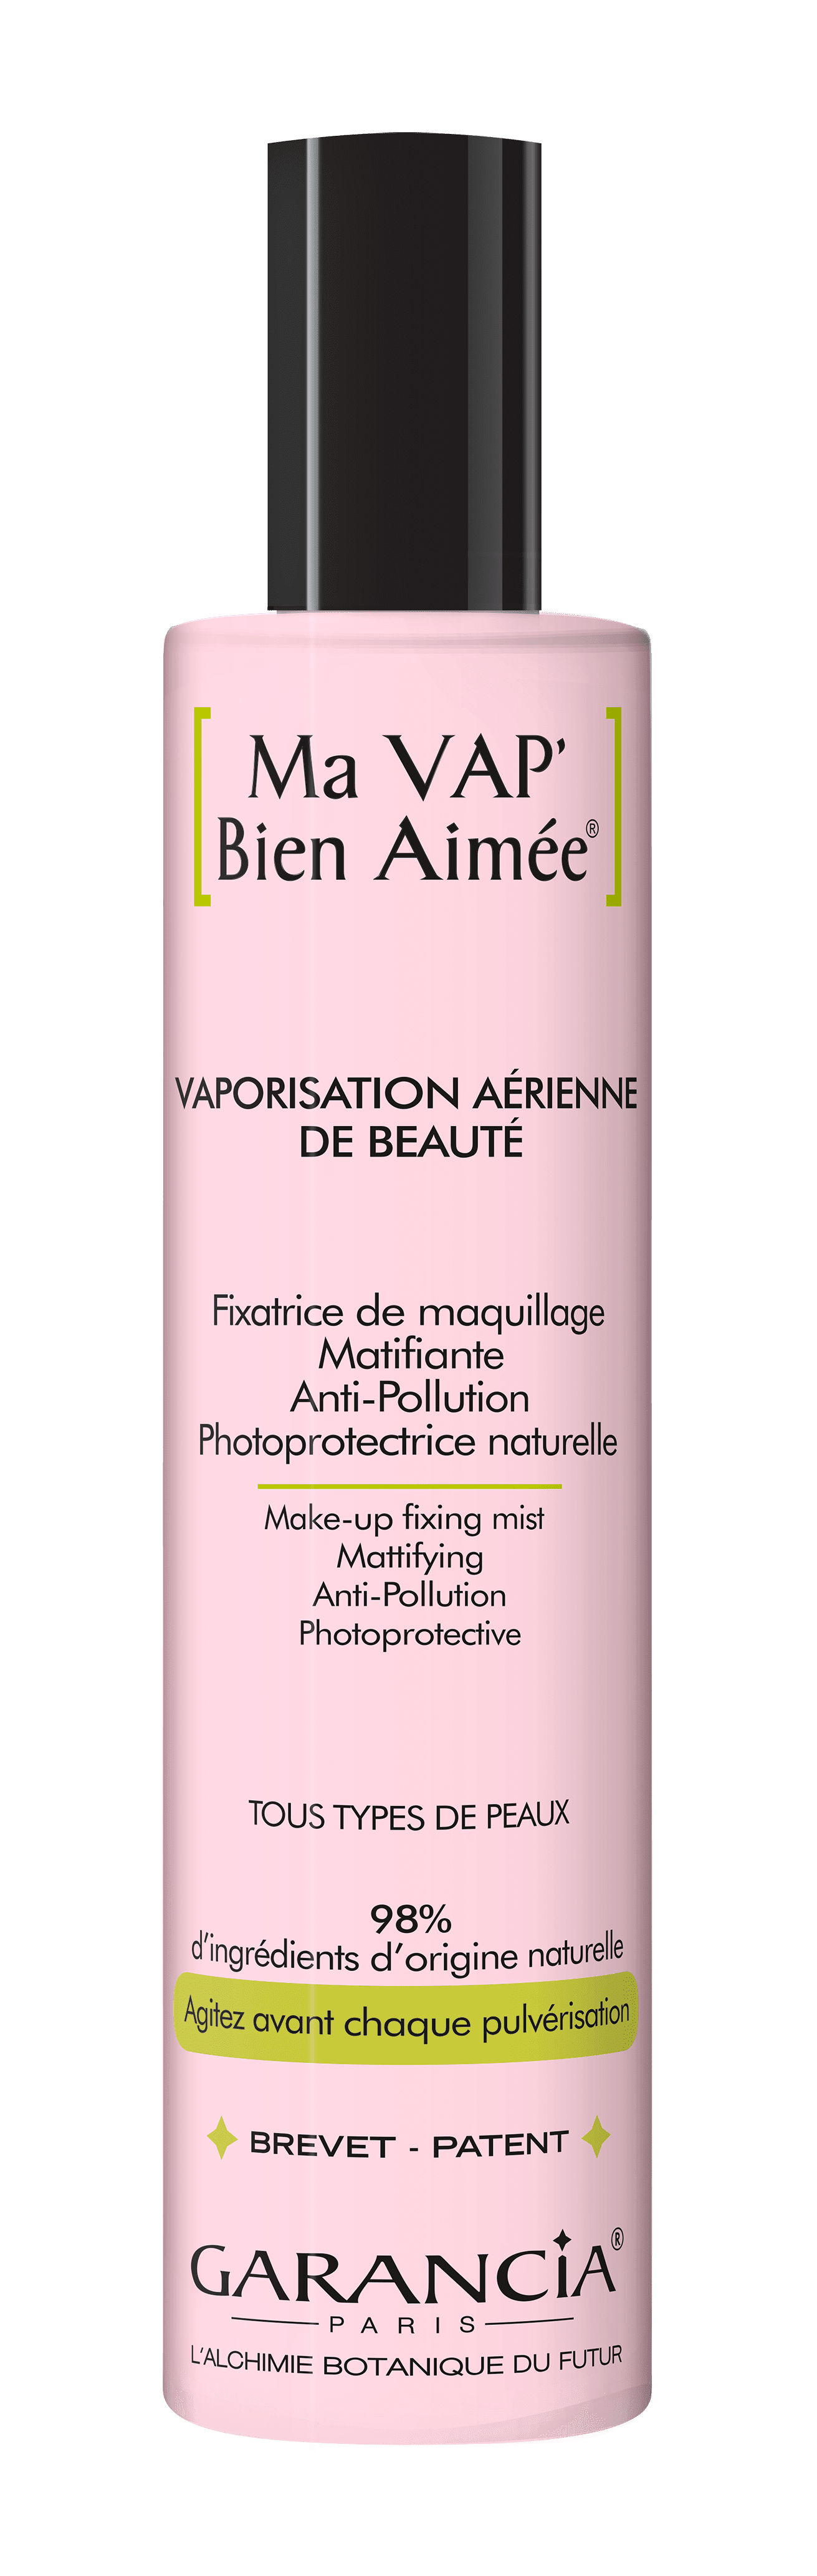 Ma Vap' Bien Aimée fixation maquillage Garancia - spray de 40ml